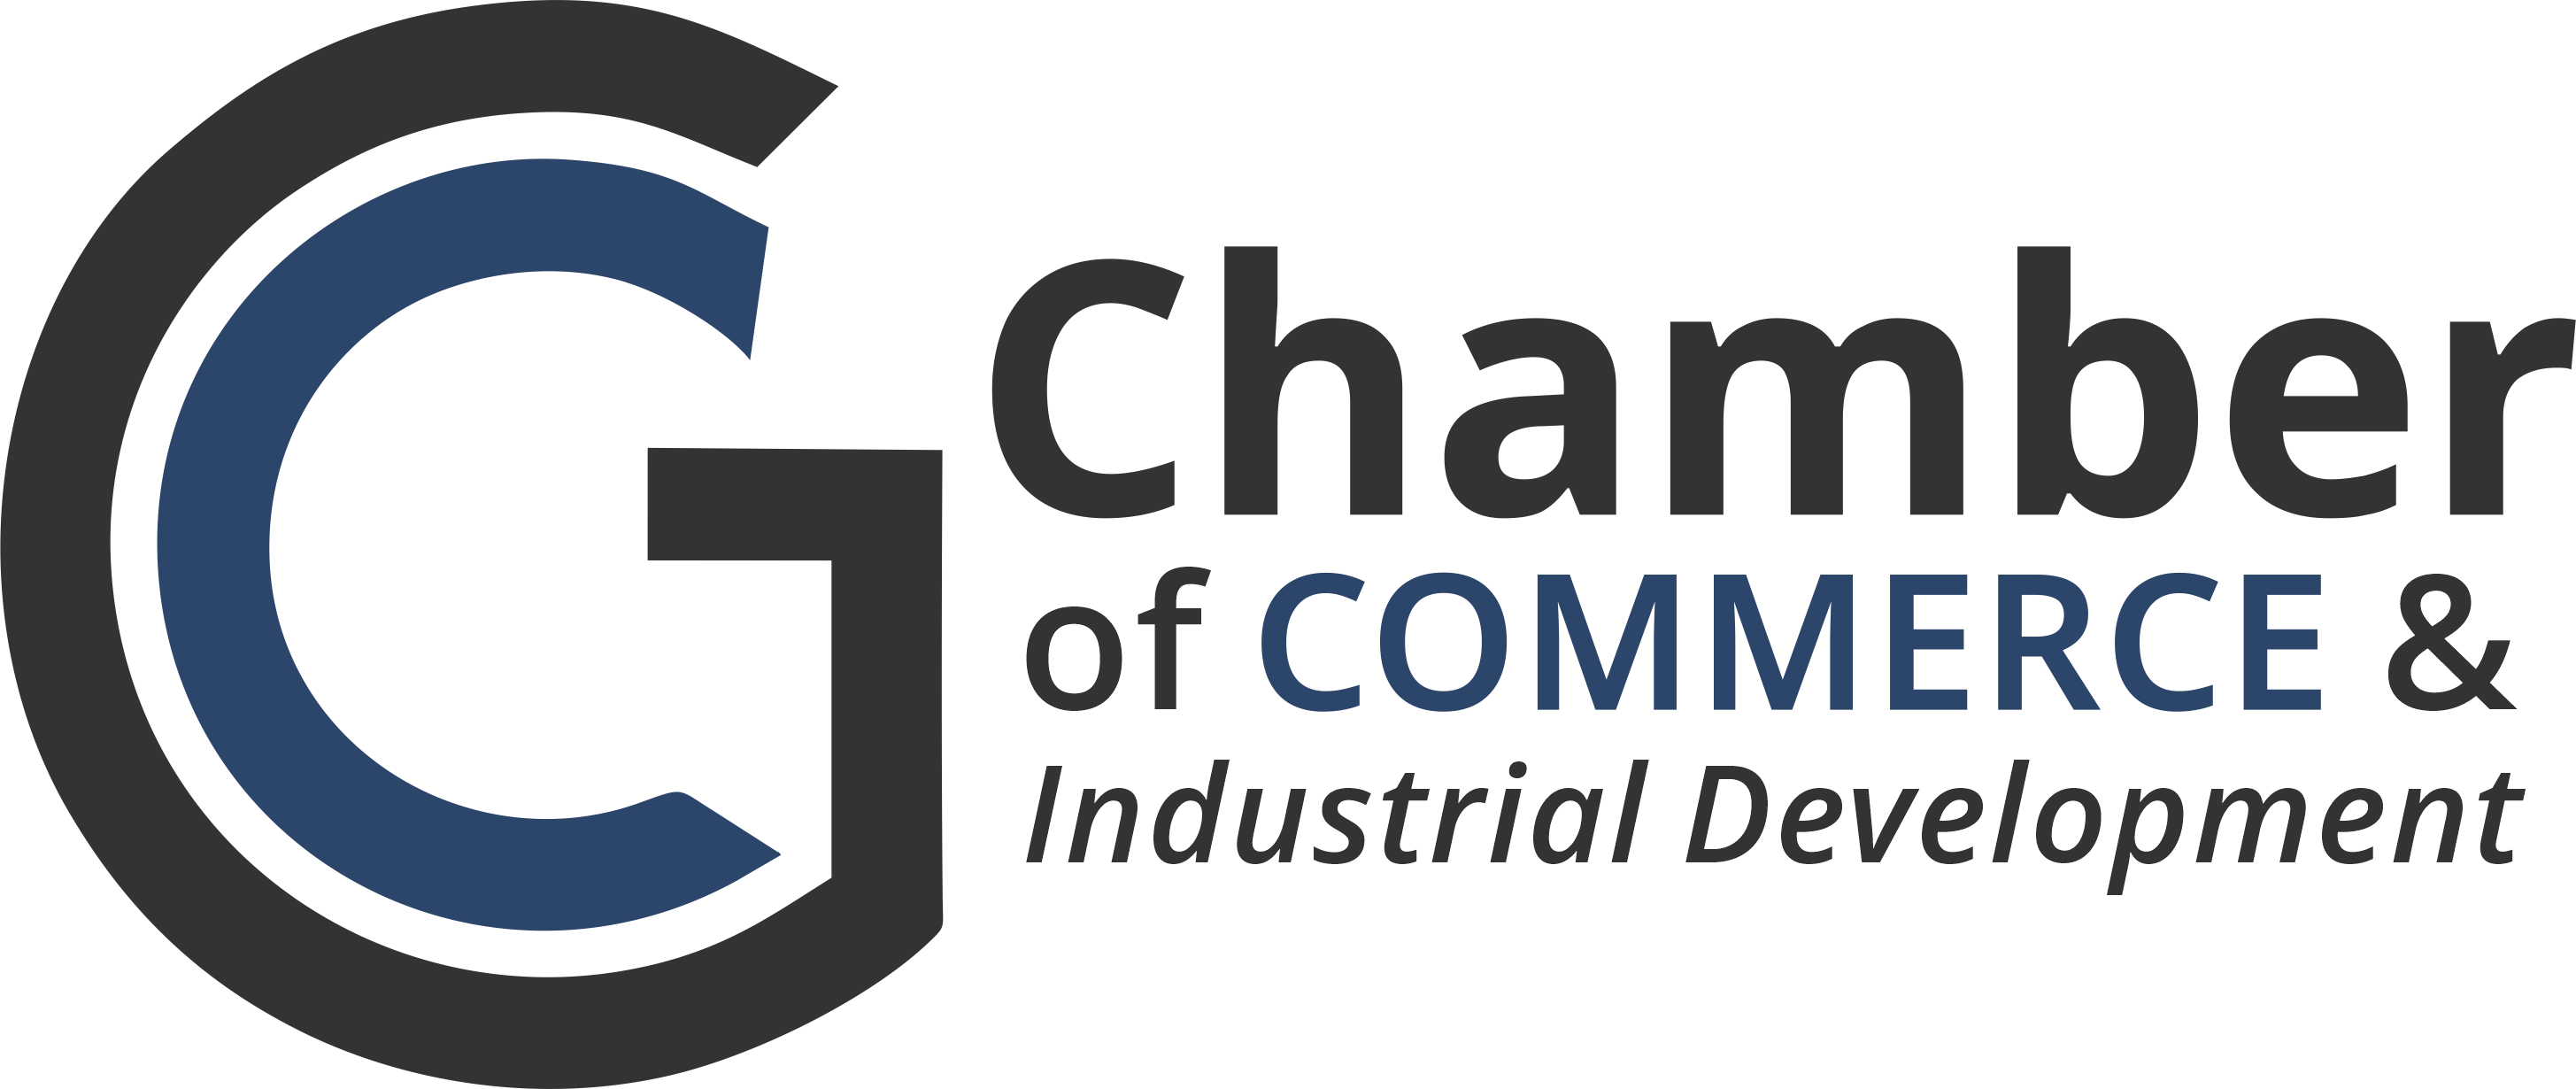 Grant County Chamber of Commerce & Economic Development